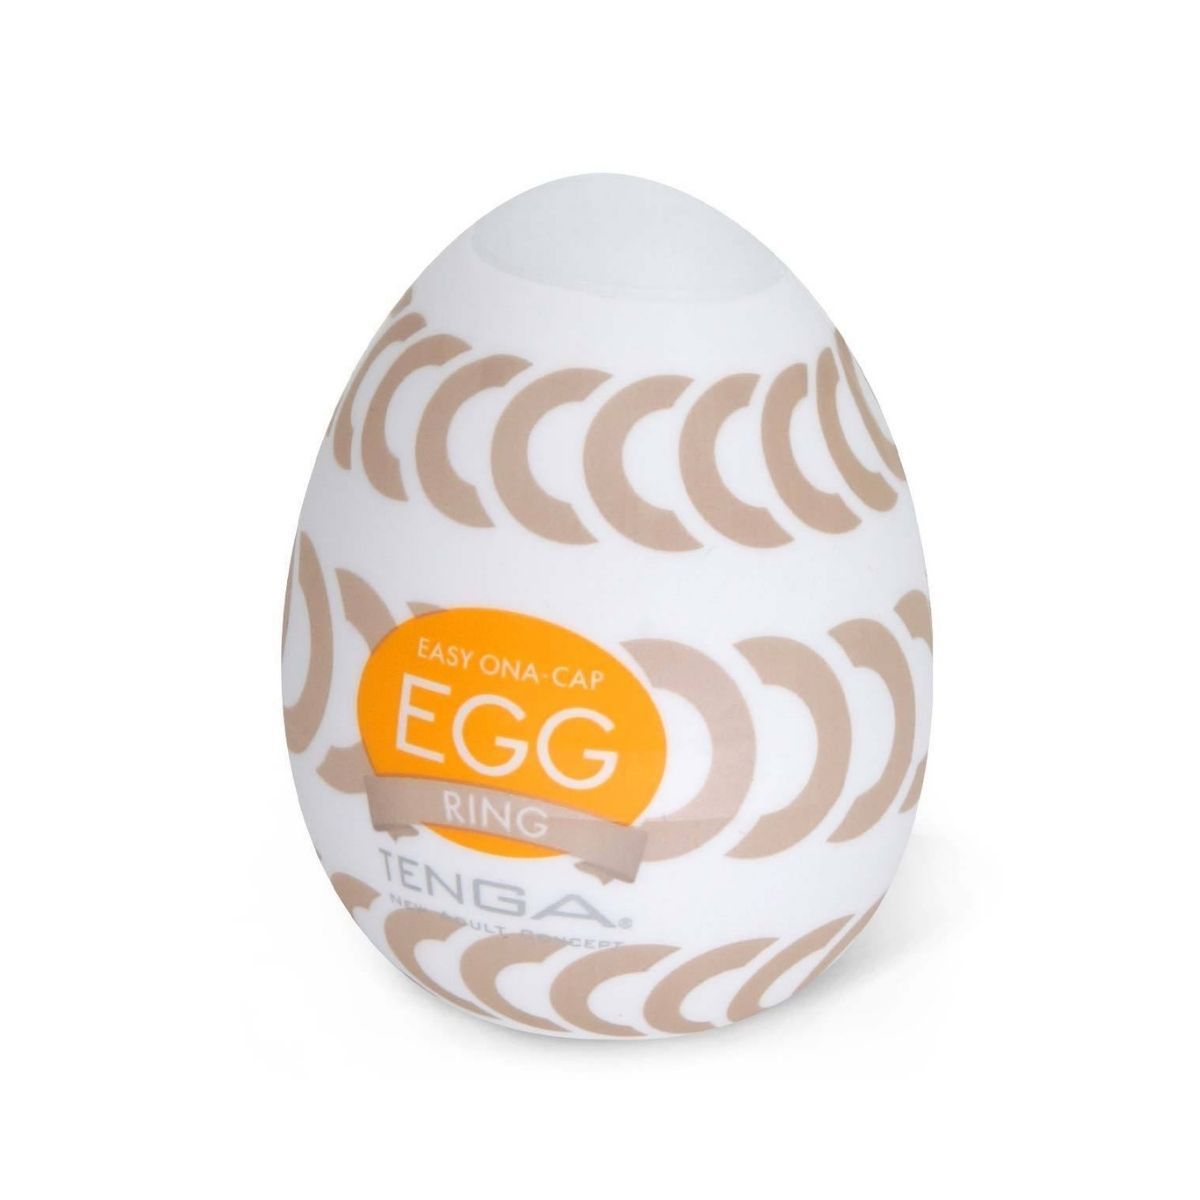 TENGA Egg Ring 環形飛機蛋 飛機蛋 購買